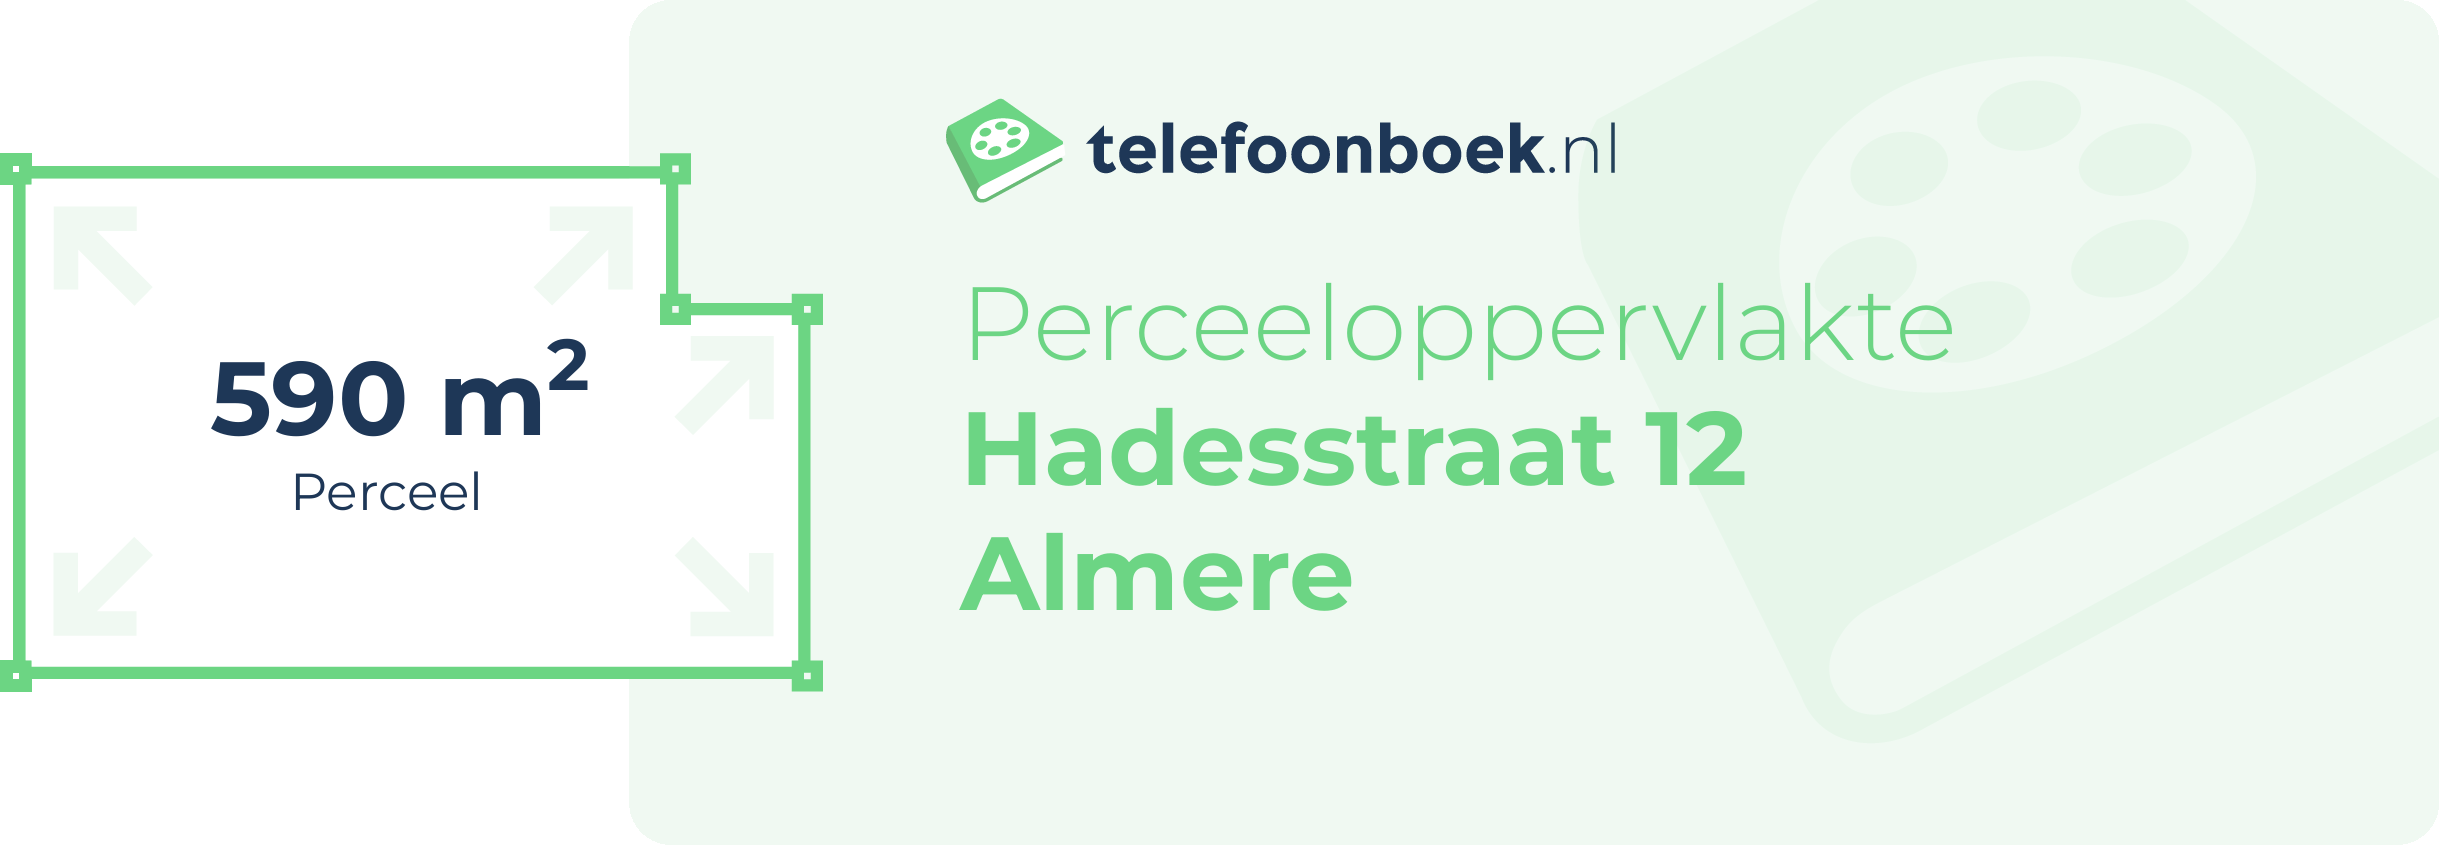 Perceeloppervlakte Hadesstraat 12 Almere